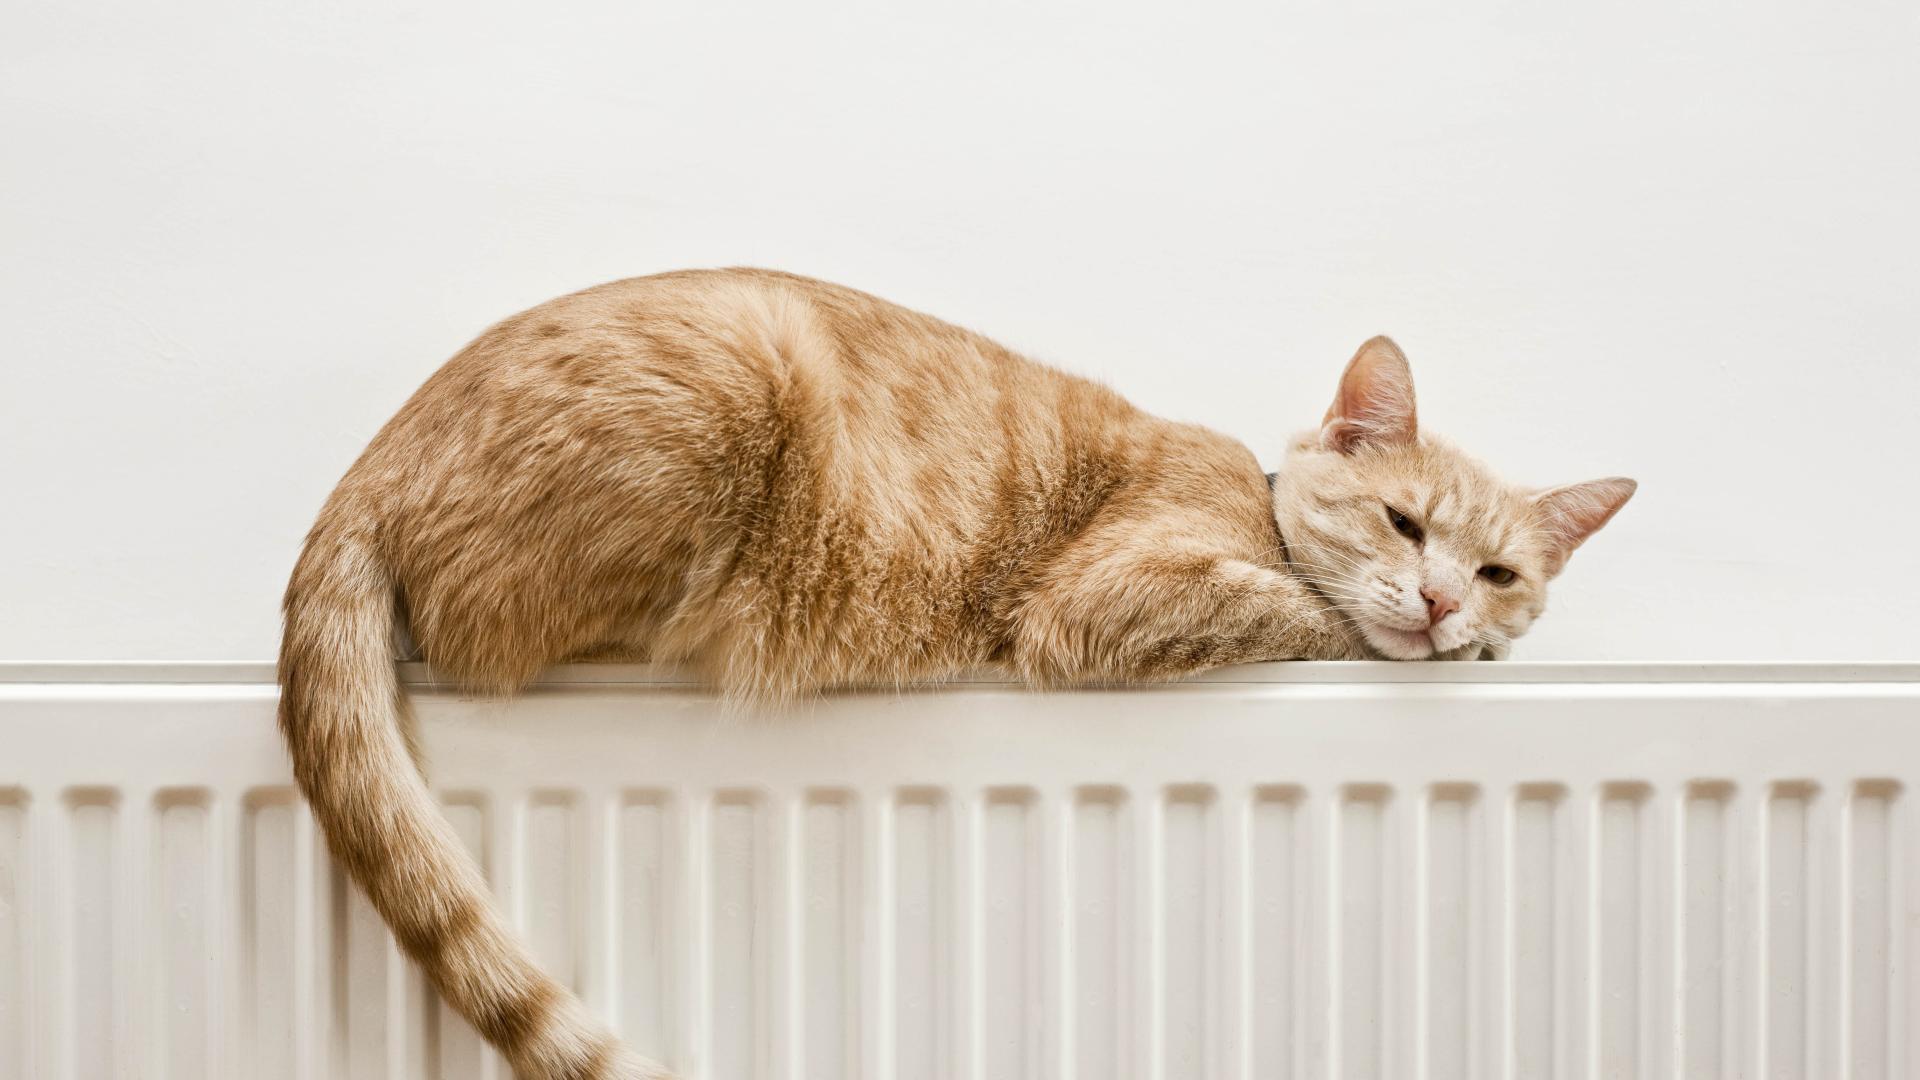 Cat warming itself on radiator